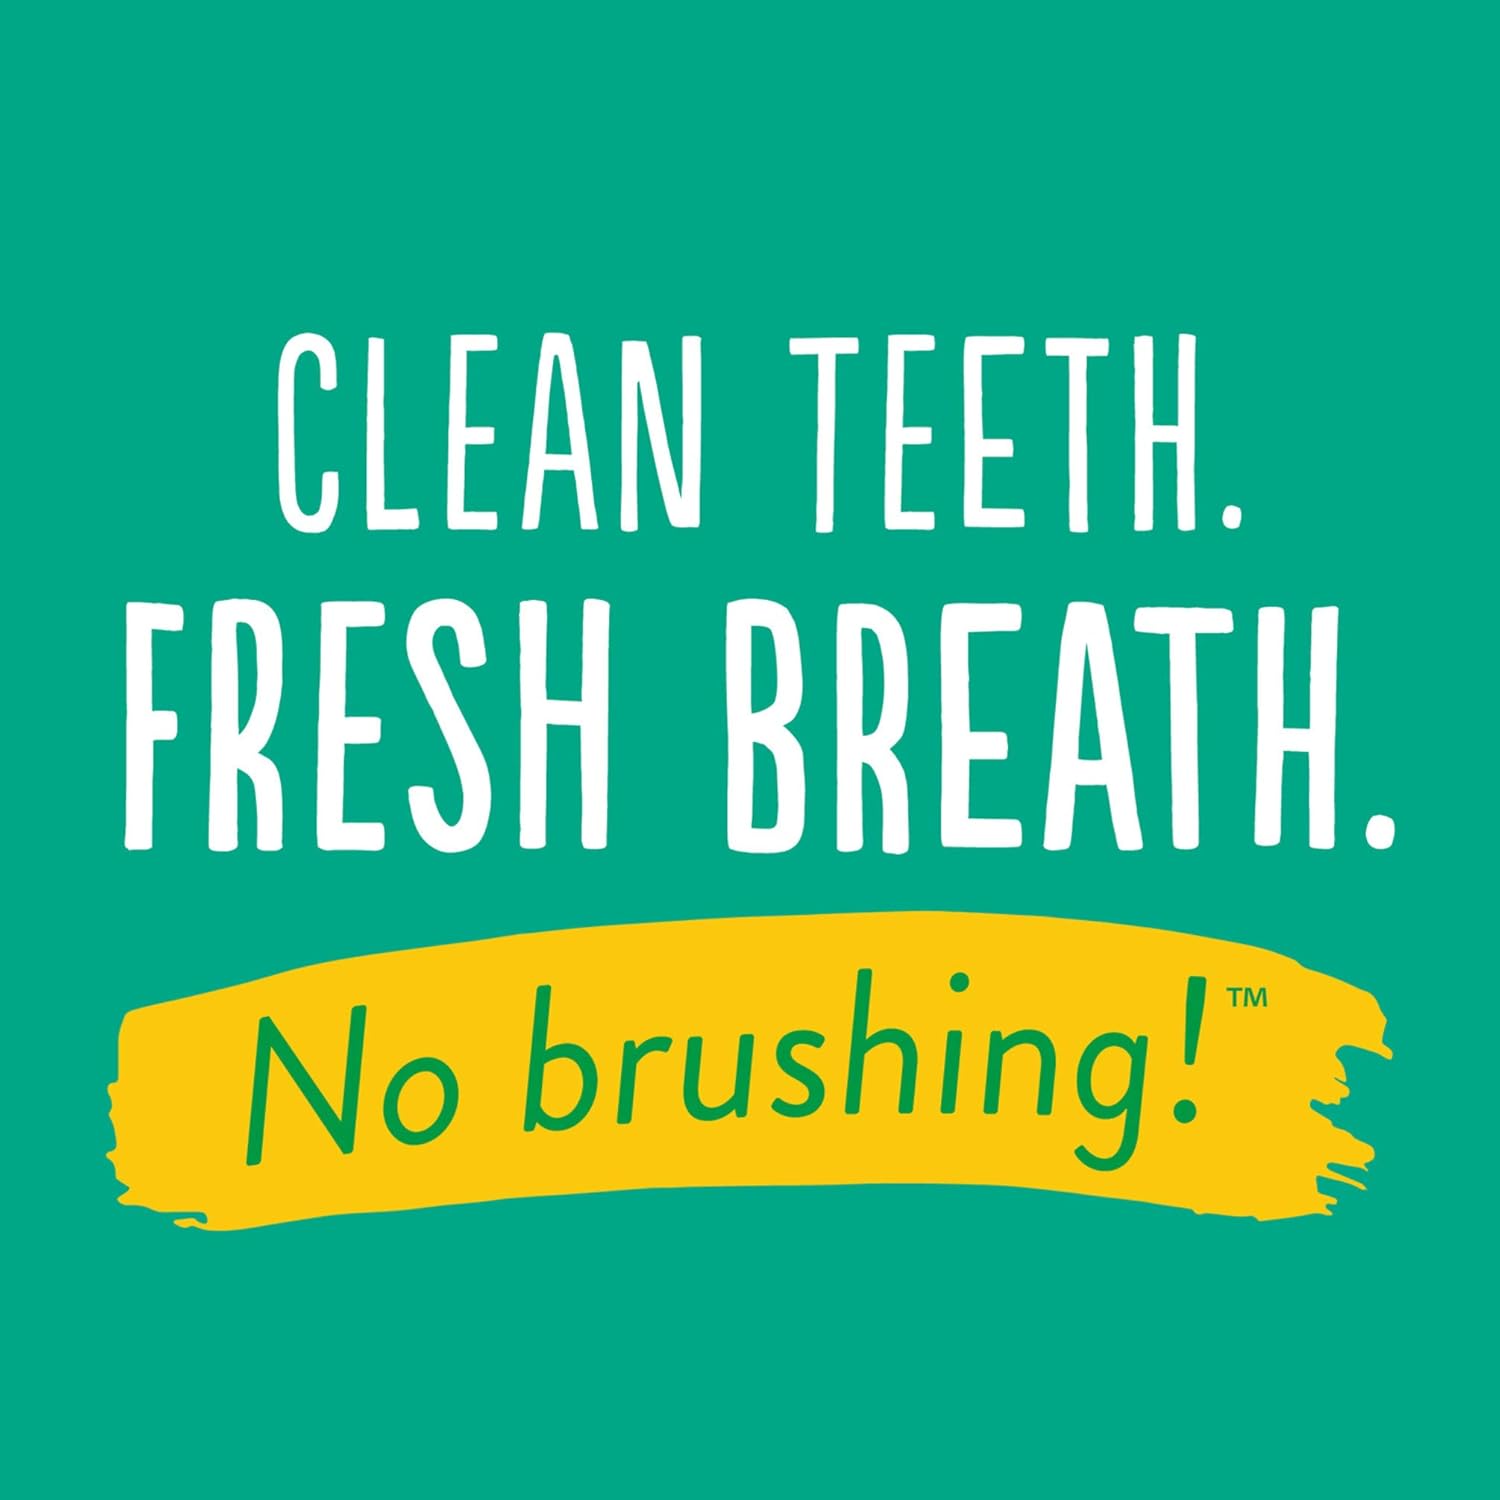 TropiClean Fresh Breath Dog Teeth Cleaning Gel - No Brushing Dental Care - Breath Freshener Oral Care - Complete Dog Teeth Cleaning Solution - Helps Remove Plaque & Tartar, Advanced Whitening, 118ml :Health & Personal Care